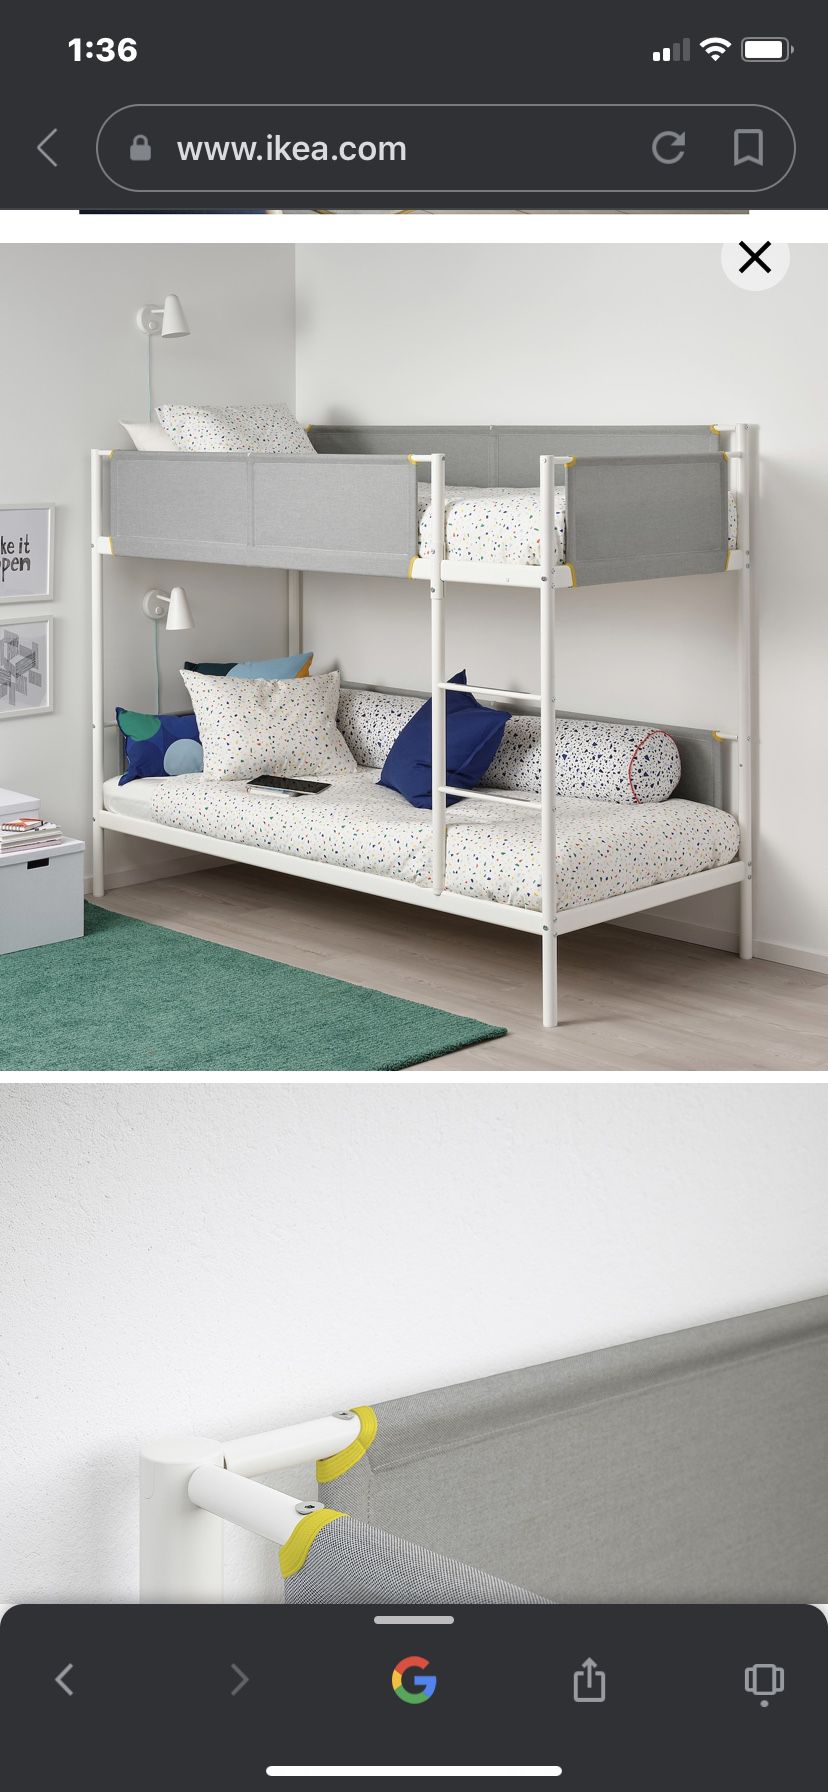 IKEA bunk bed